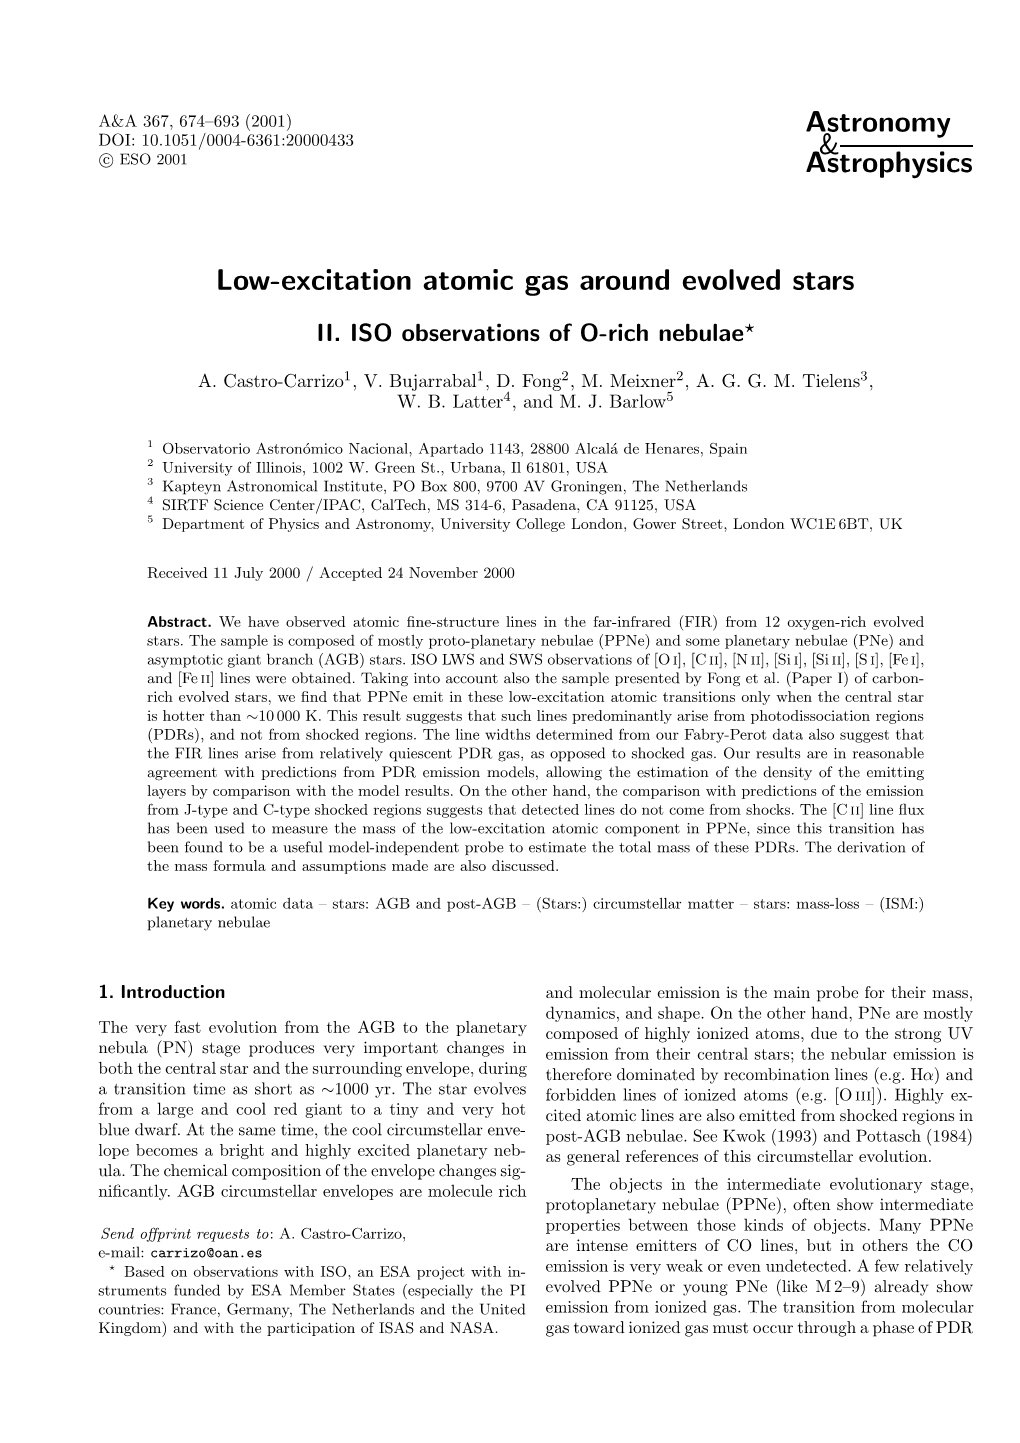 Astronomy & Astrophysics Low-Excitation Atomic Gas Around